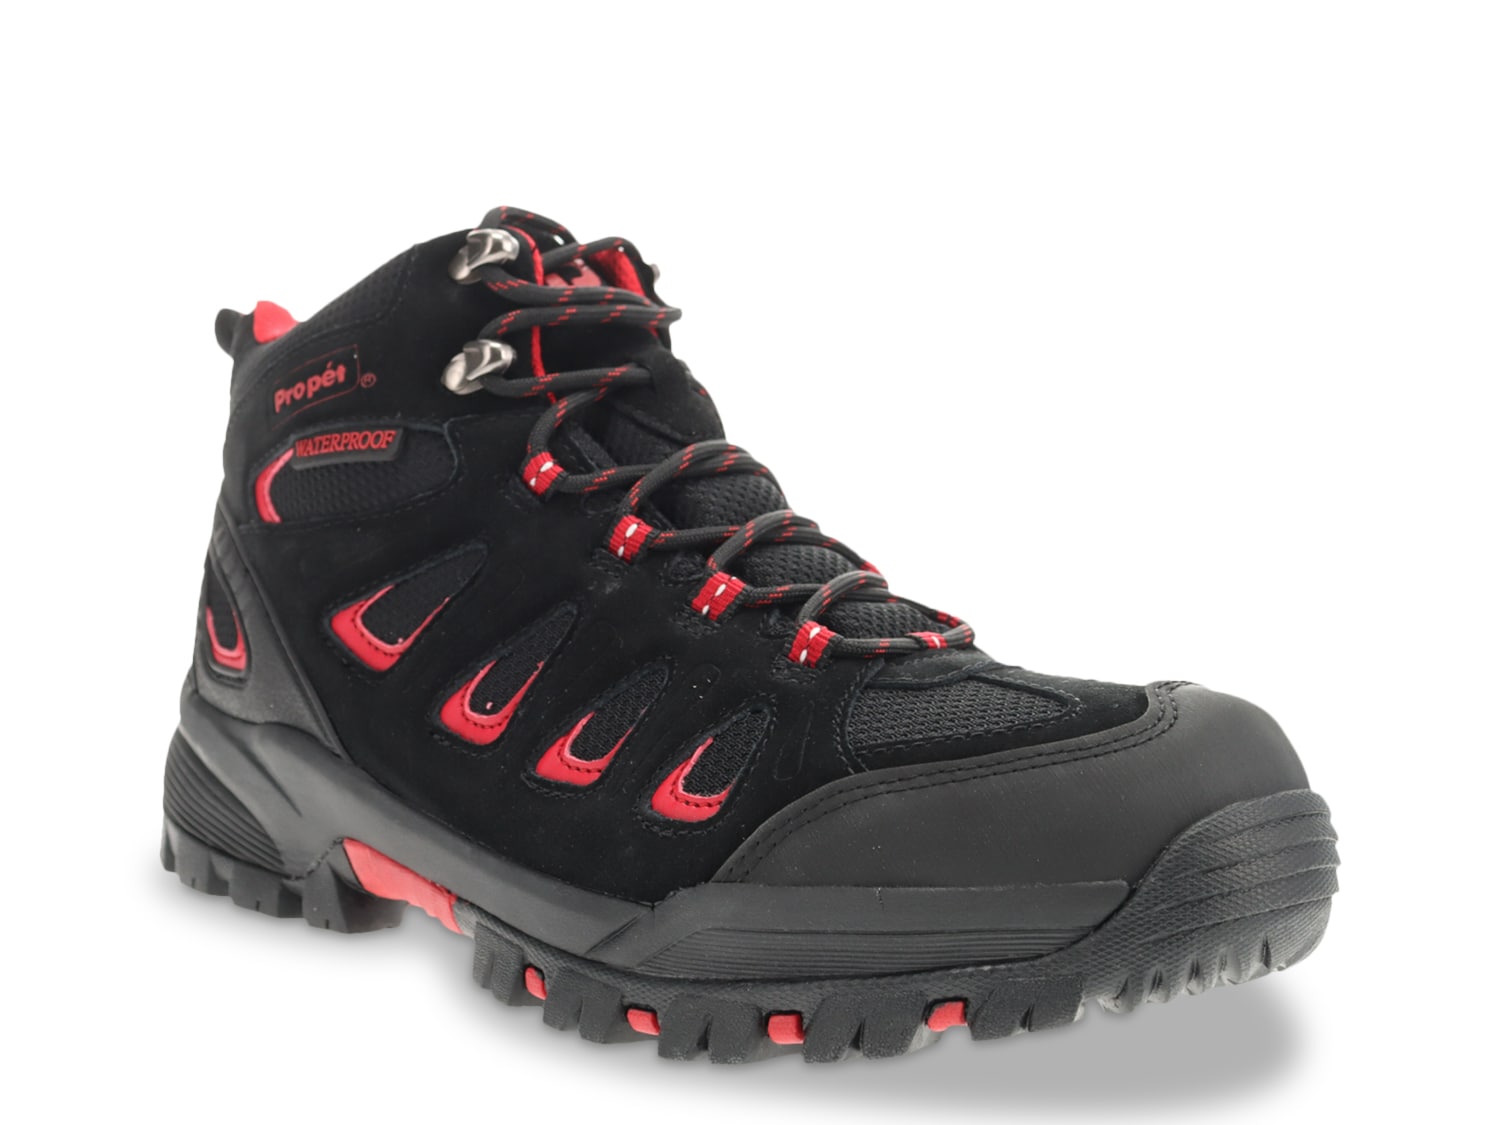 Propet Pro Ridge Walker Hiking Boot - Men's - Free Shipping | DSW